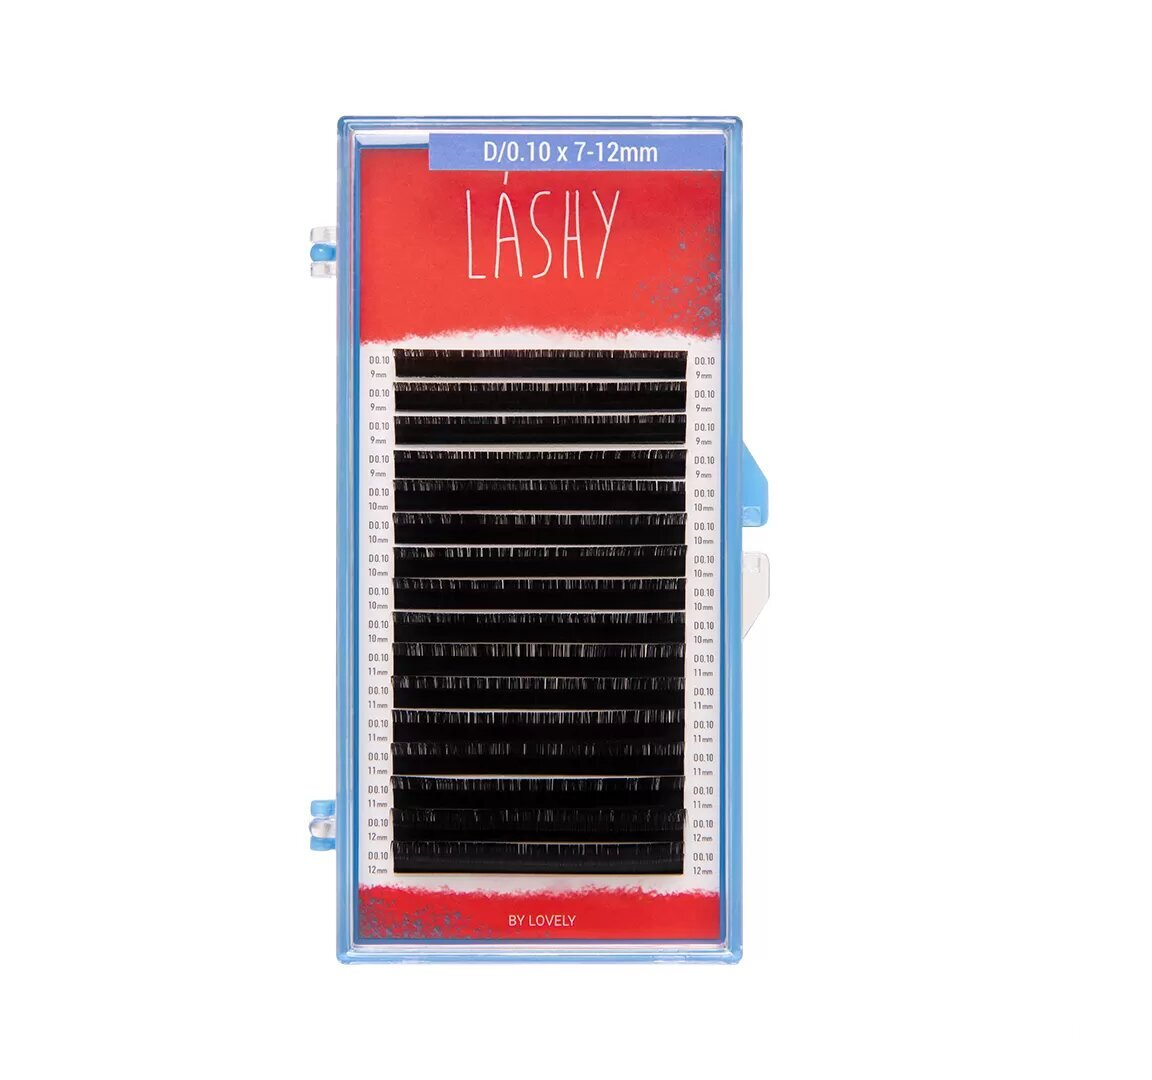 Ресницы Lashy Lovely чёрные 16 линий M 0.07 13 мм клей lovely lashy fast 5 мл